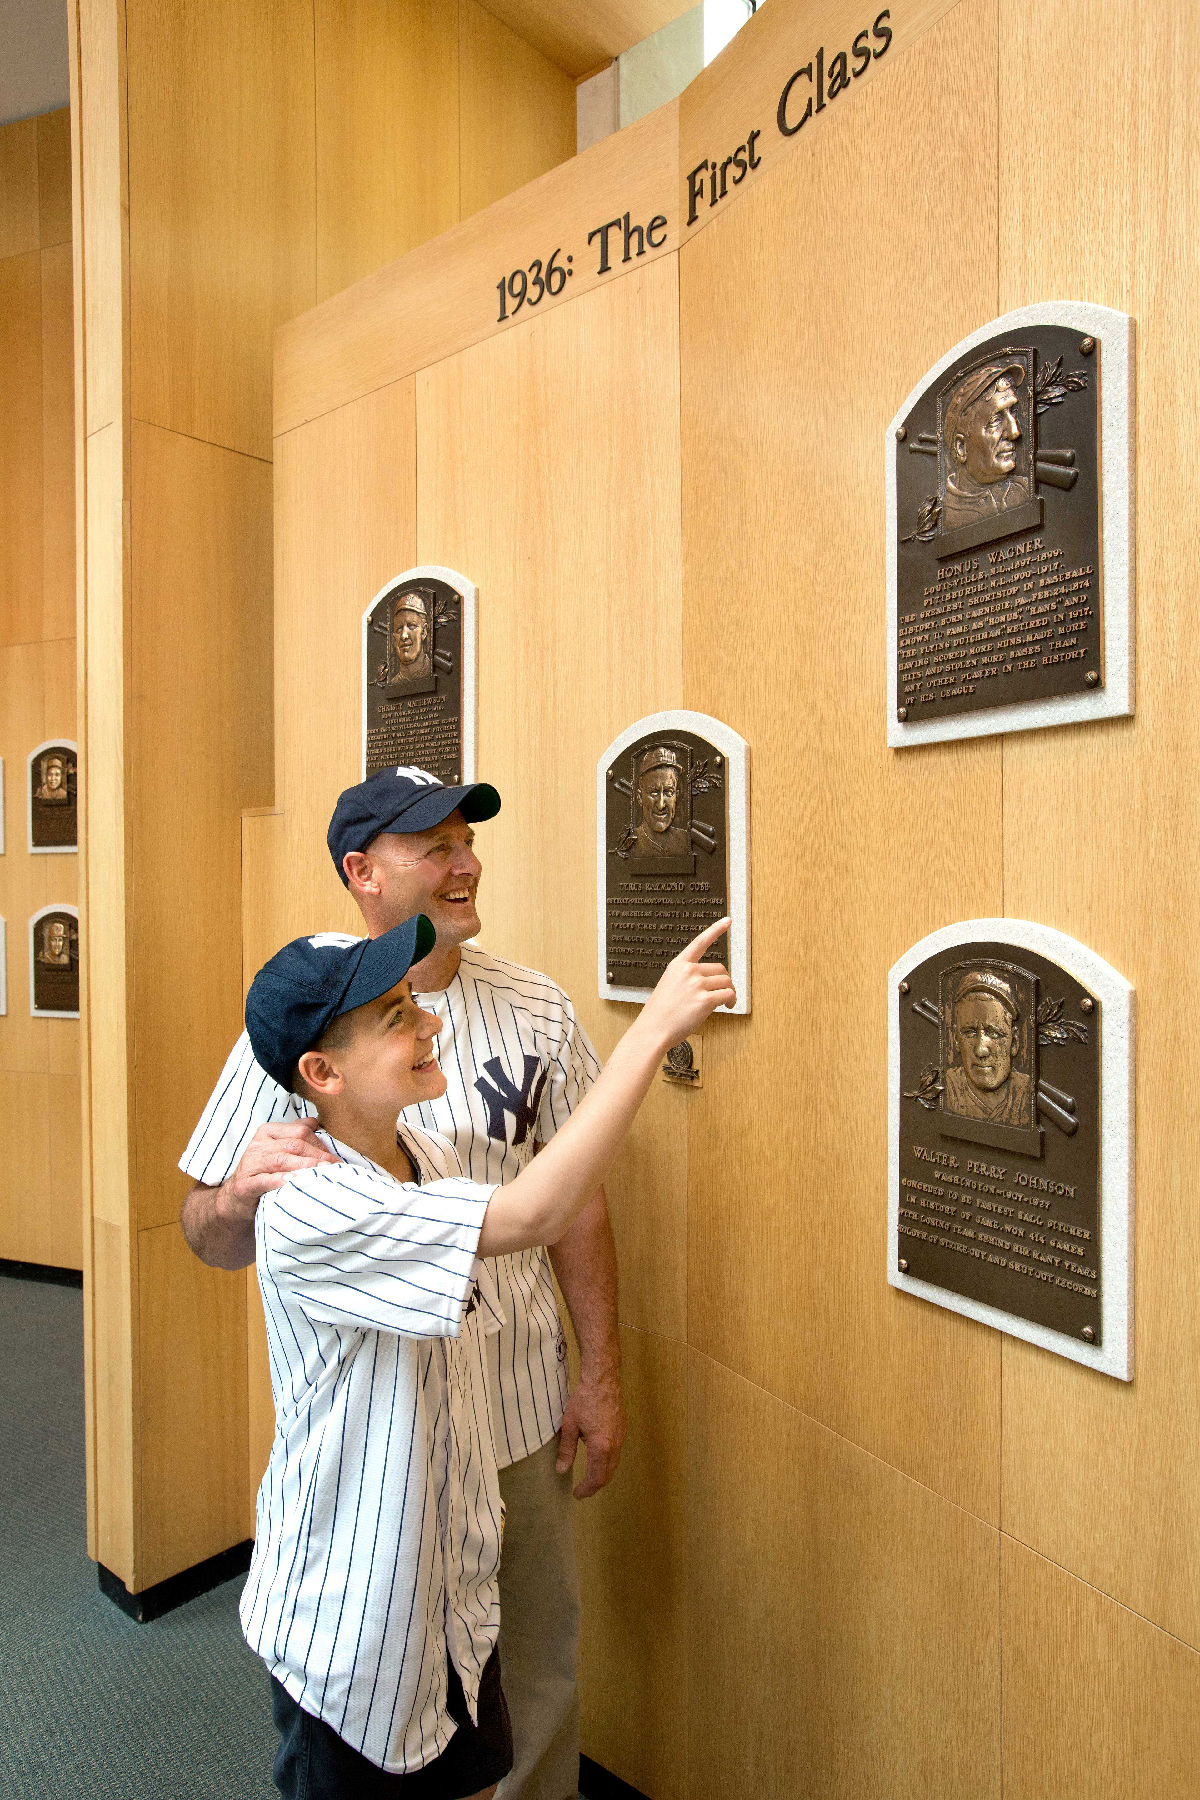 The National Baseball Hall of Fame and Museum